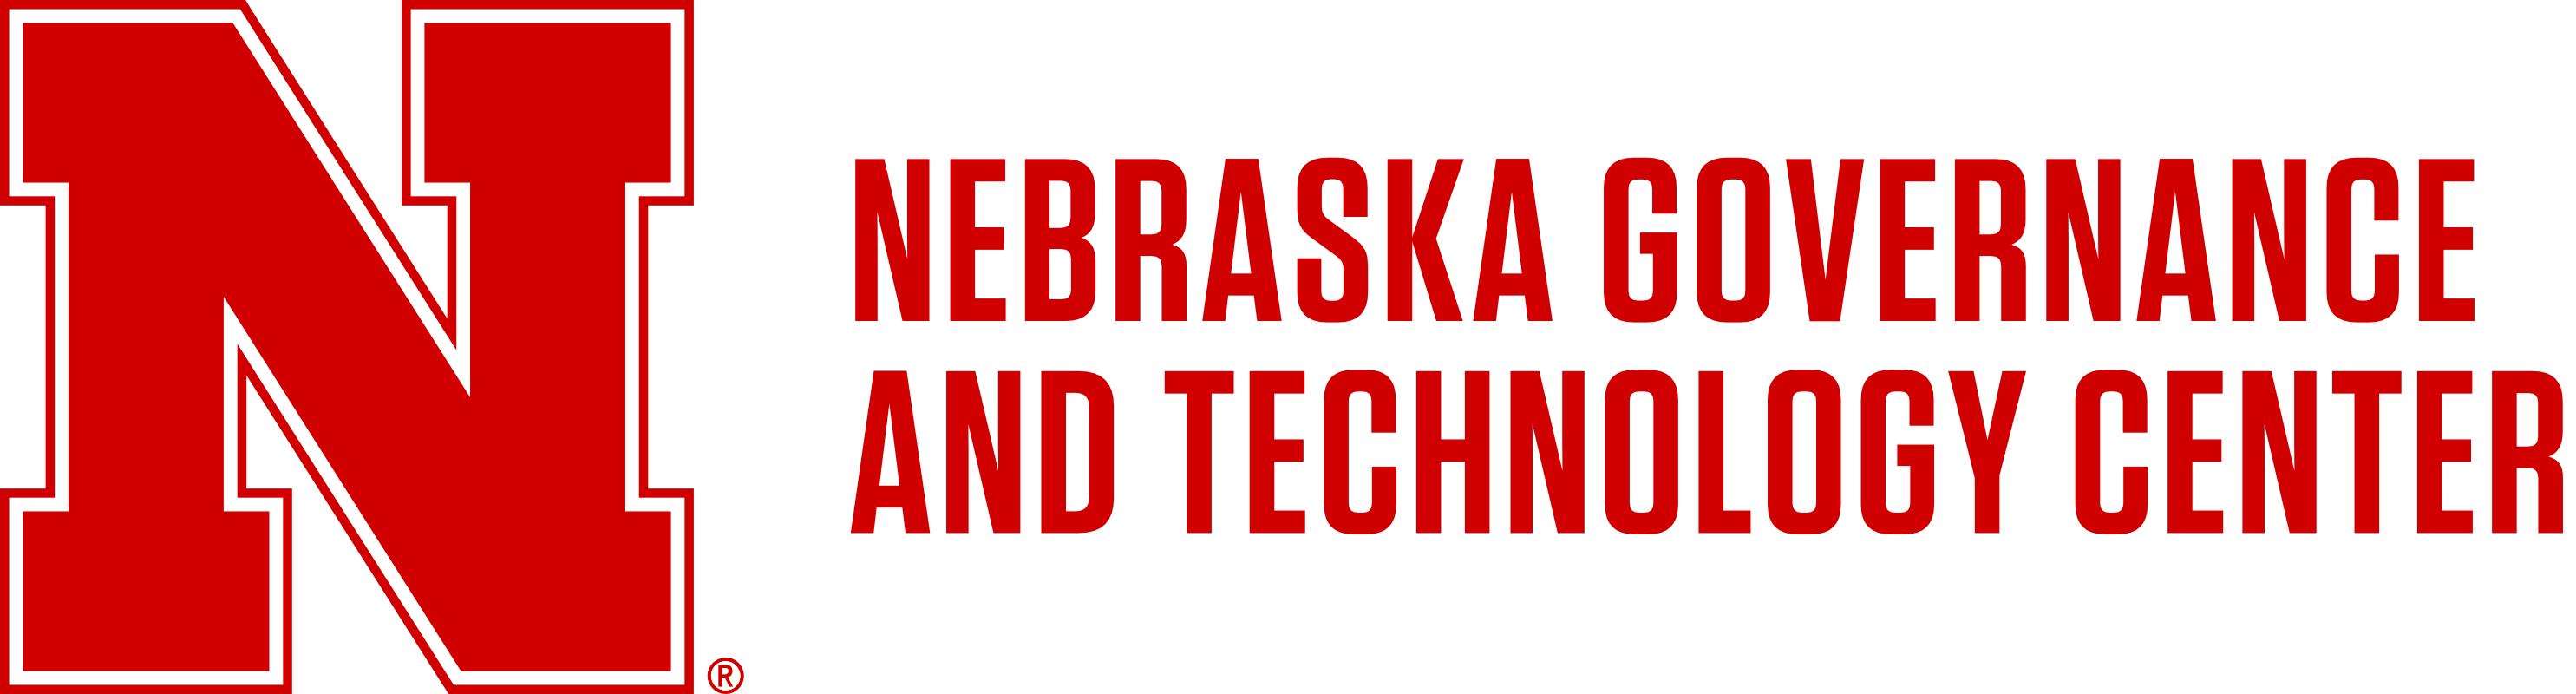 Nebraska Governance and Technology Center